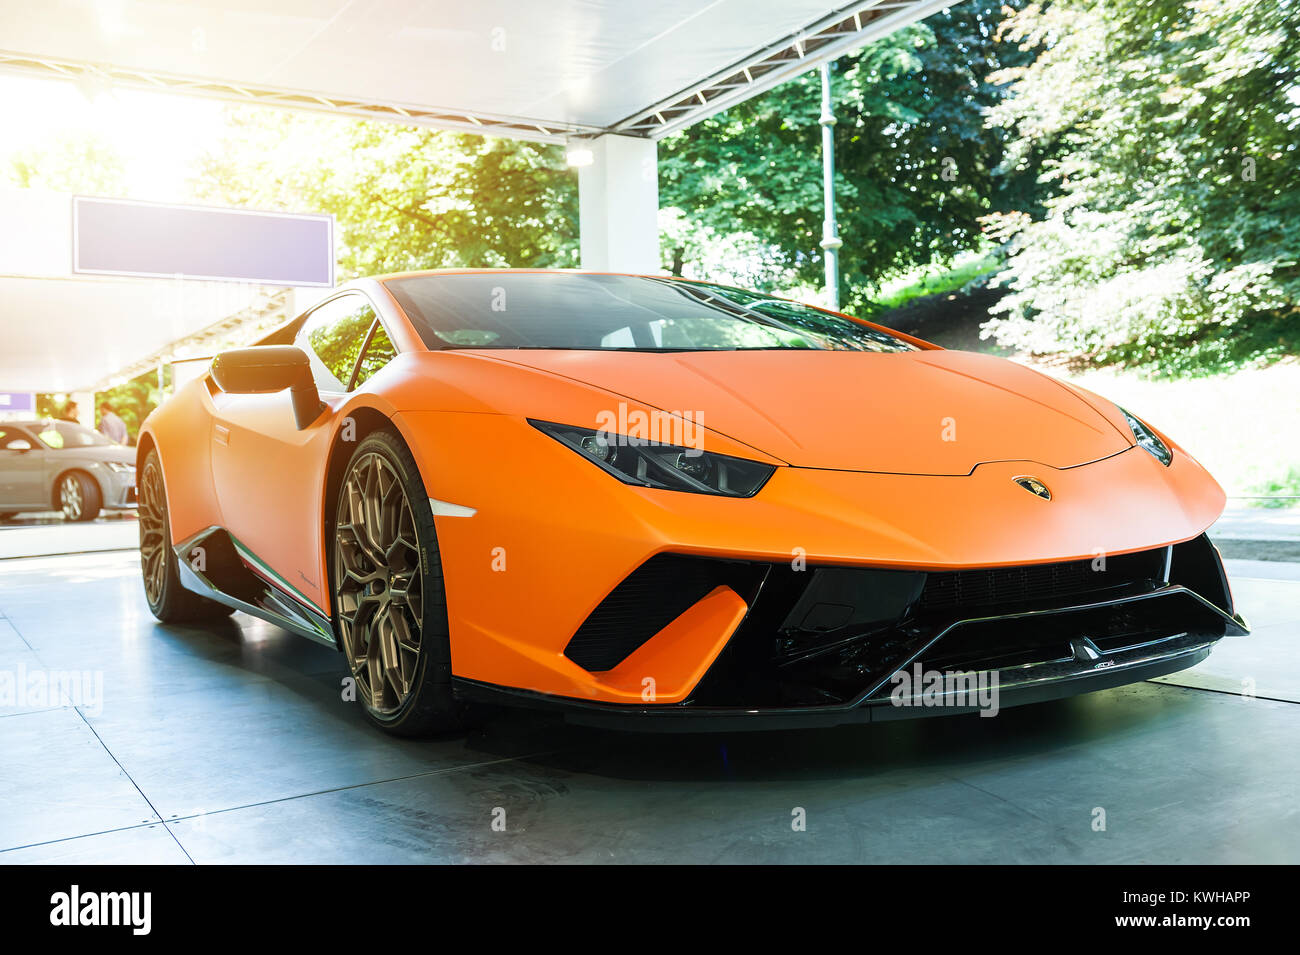 Turin - 08 Juni 2017: Showroom. In der Nähe der neuen Lamborghini Huracan Stockfoto